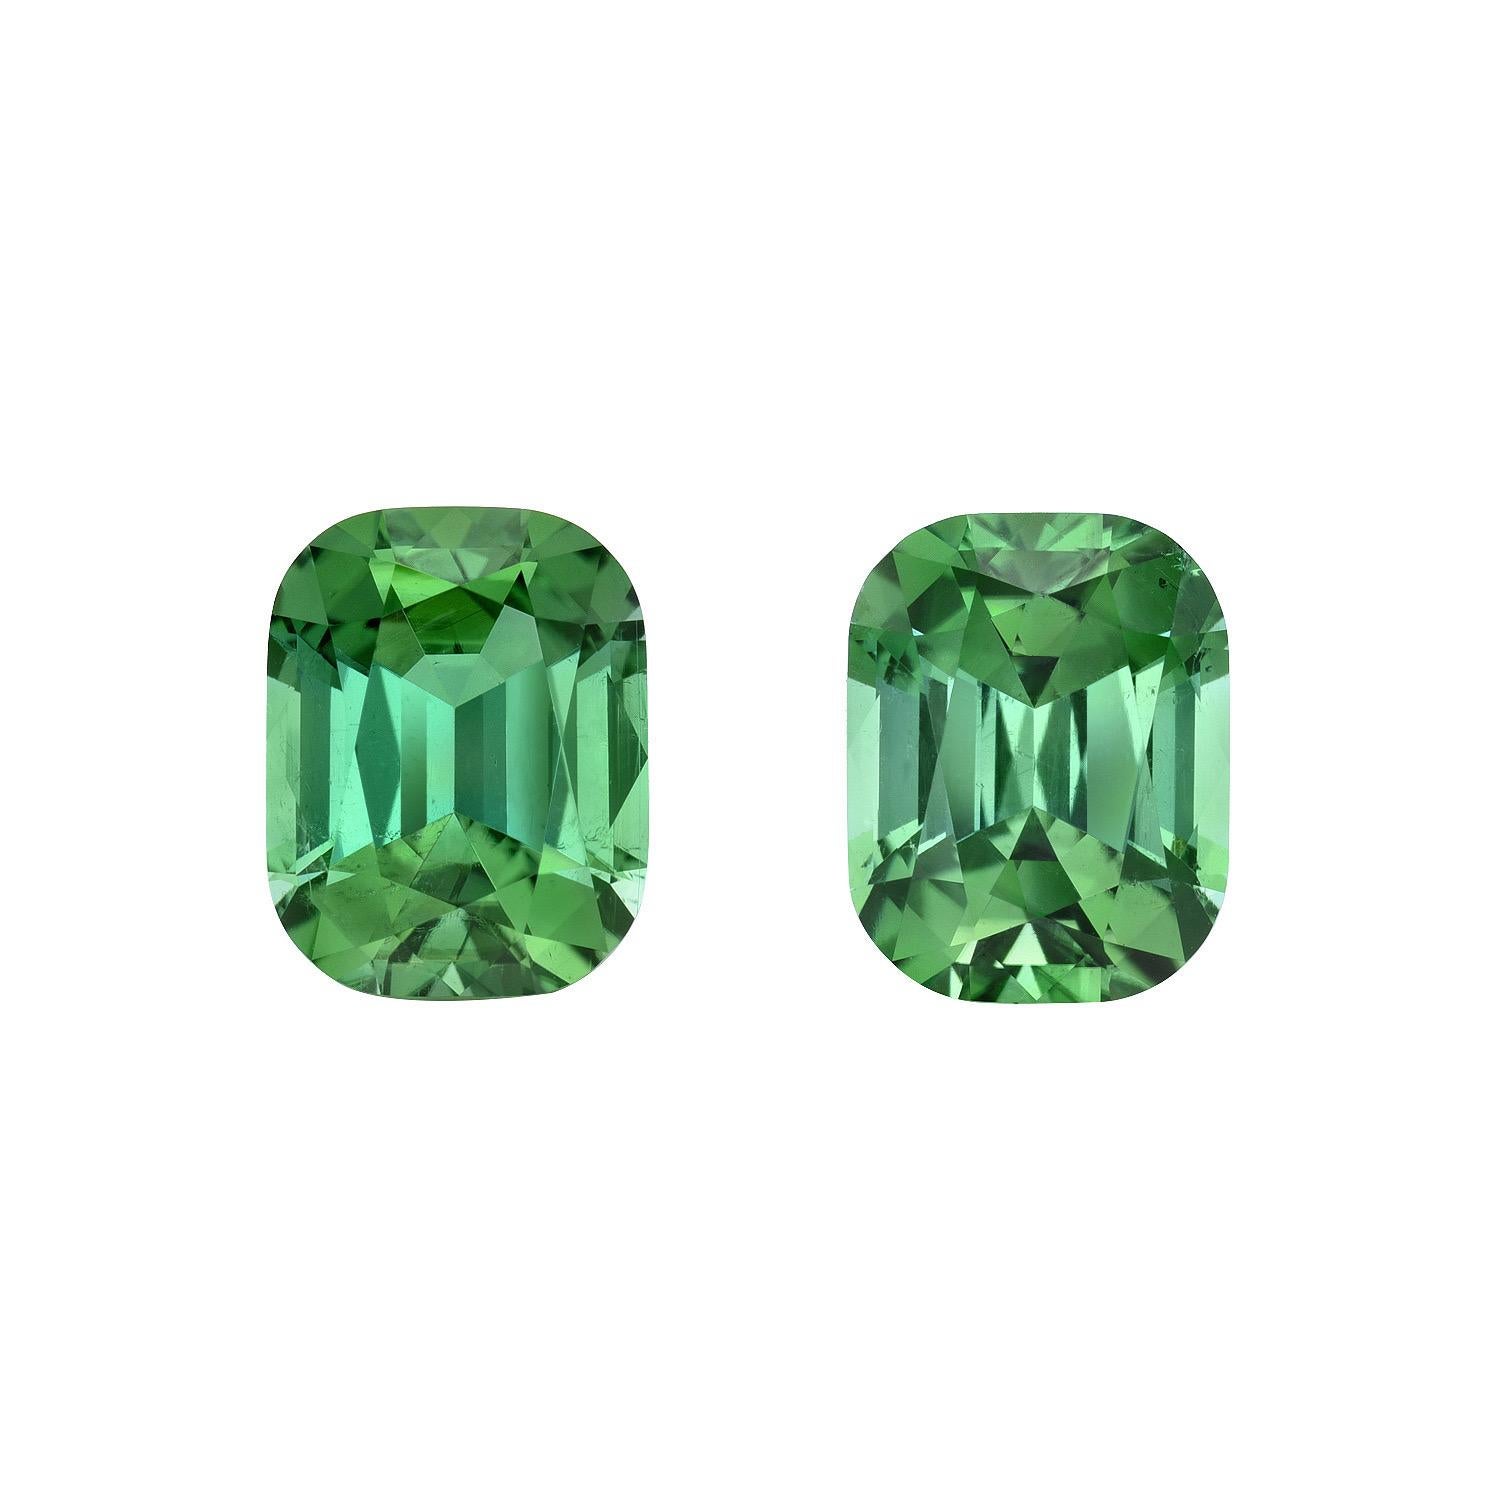 Supreme mismatched pair of 3.61 carat 